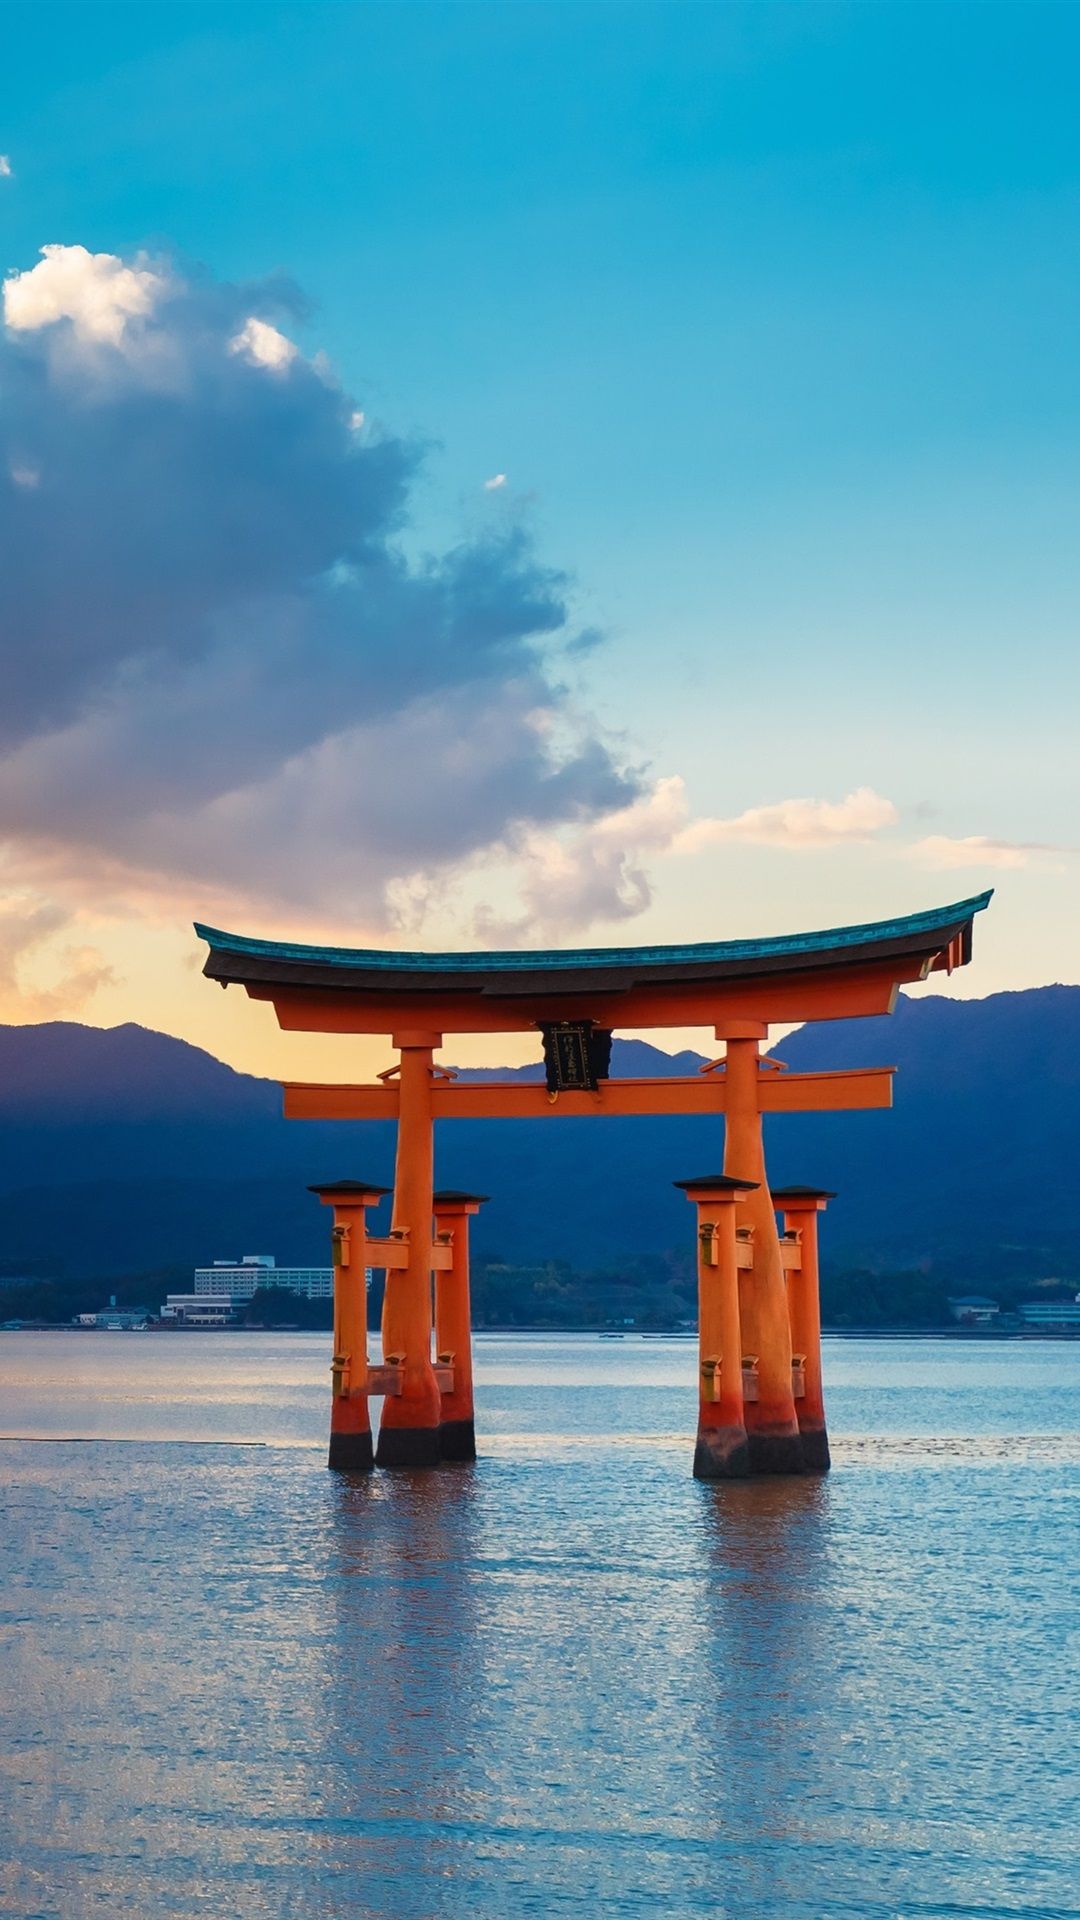 Wallpaper Torii Gate, sea, sunset, Japan 3840x2160 UHD 4K Picture